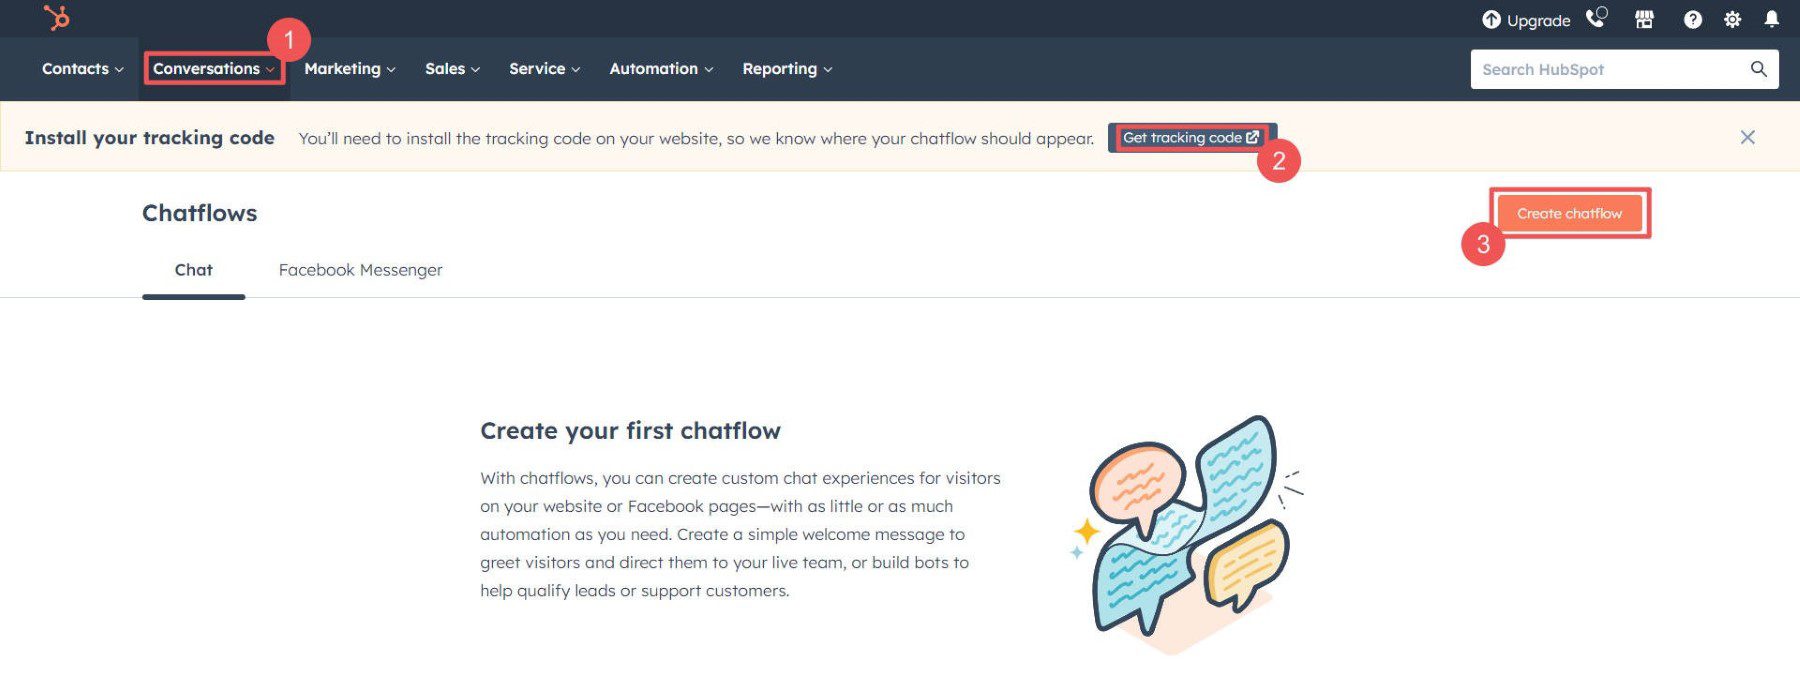 Create Chatflow - Steps 1-3